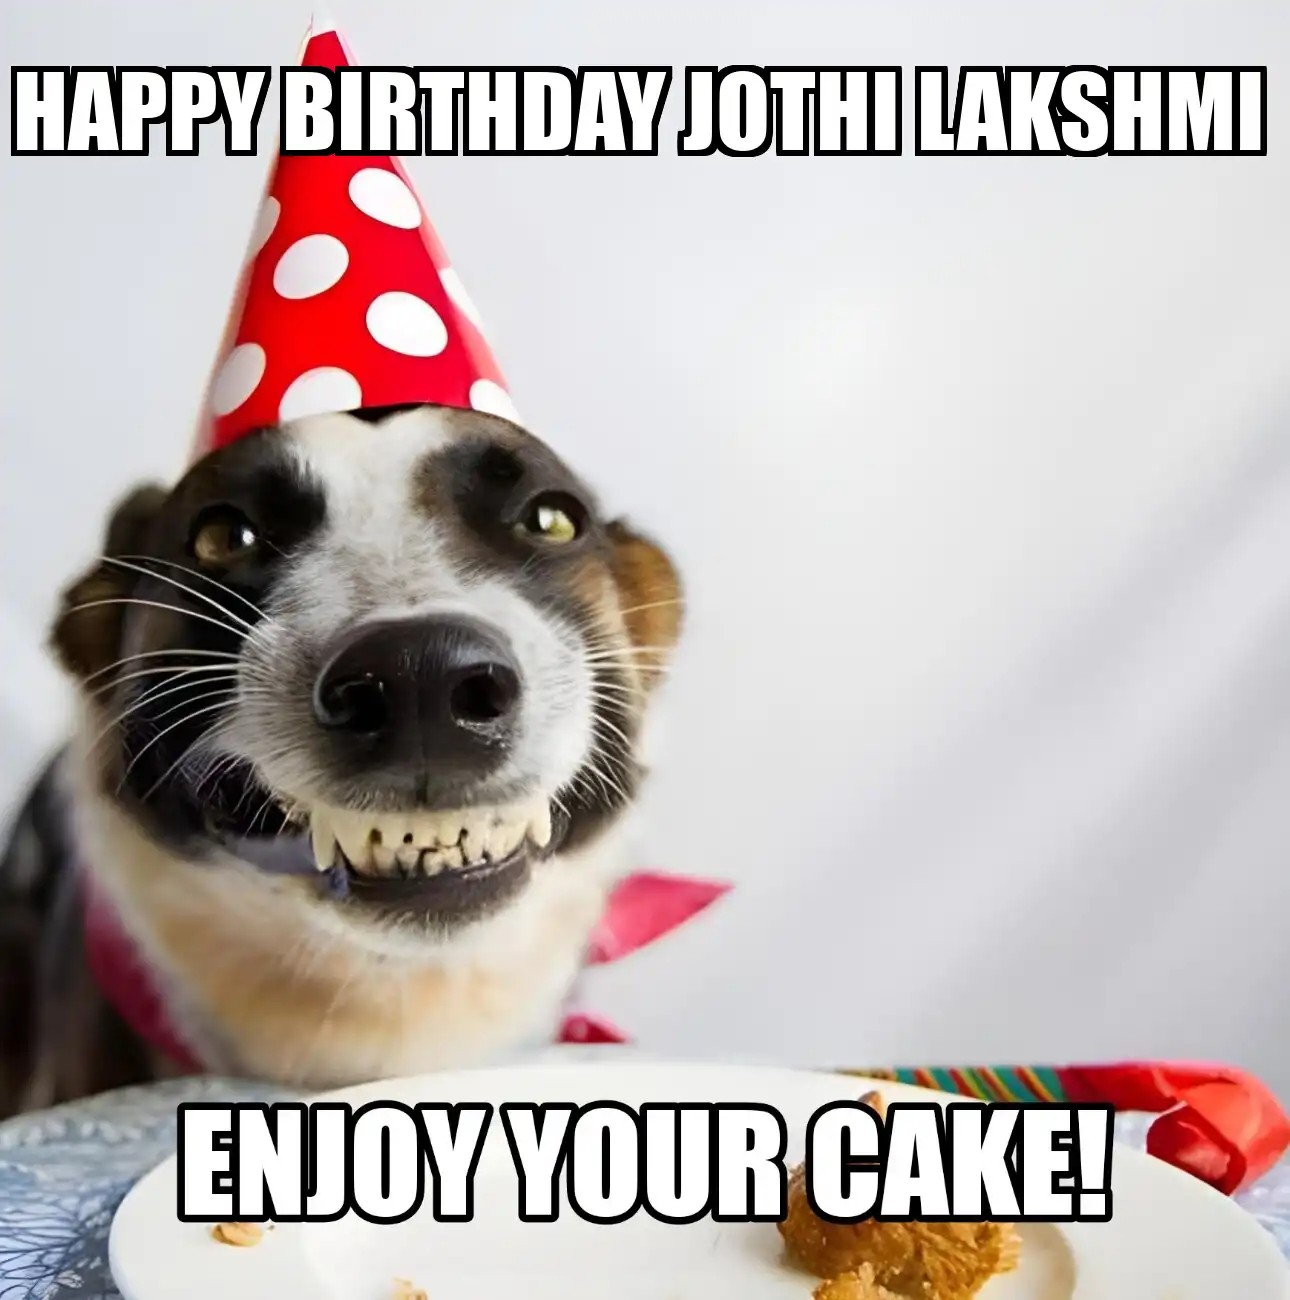 Happy Birthday Jothi lakshmi Enjoy Your Cake Dog Meme